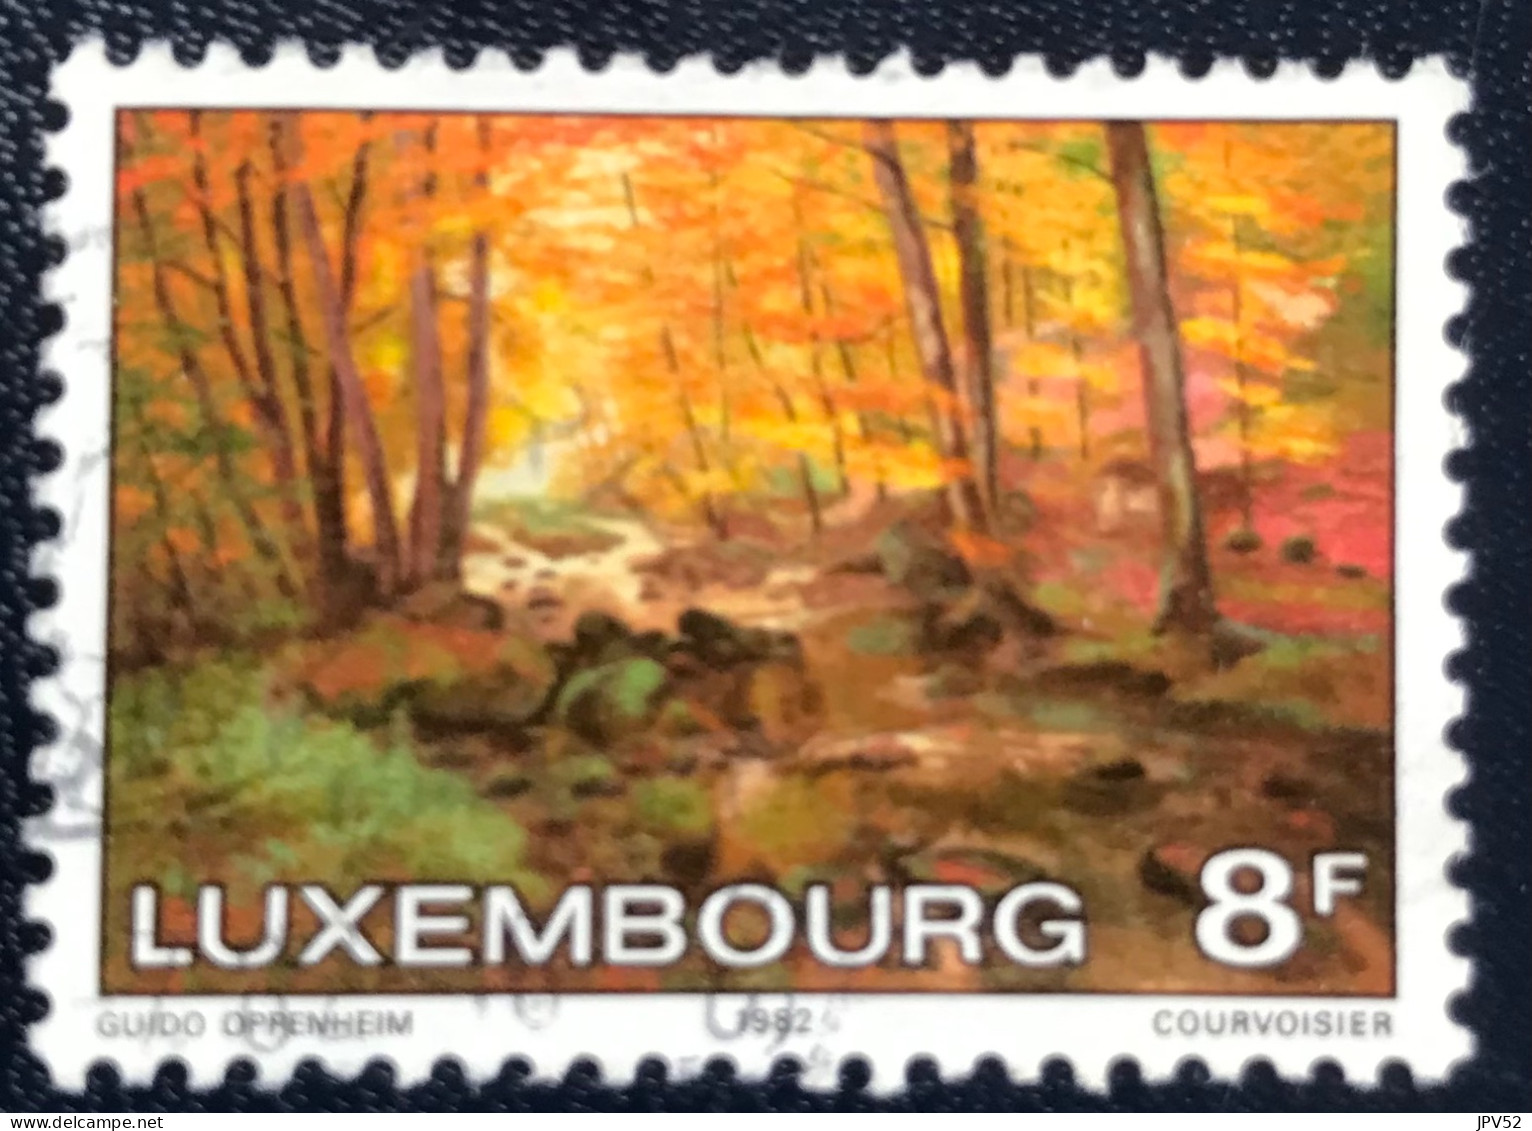 Luxembourg - Luxemburg - C18/31 - 1982 - (°)used - Michel 1048 - Schilderijen - Usati